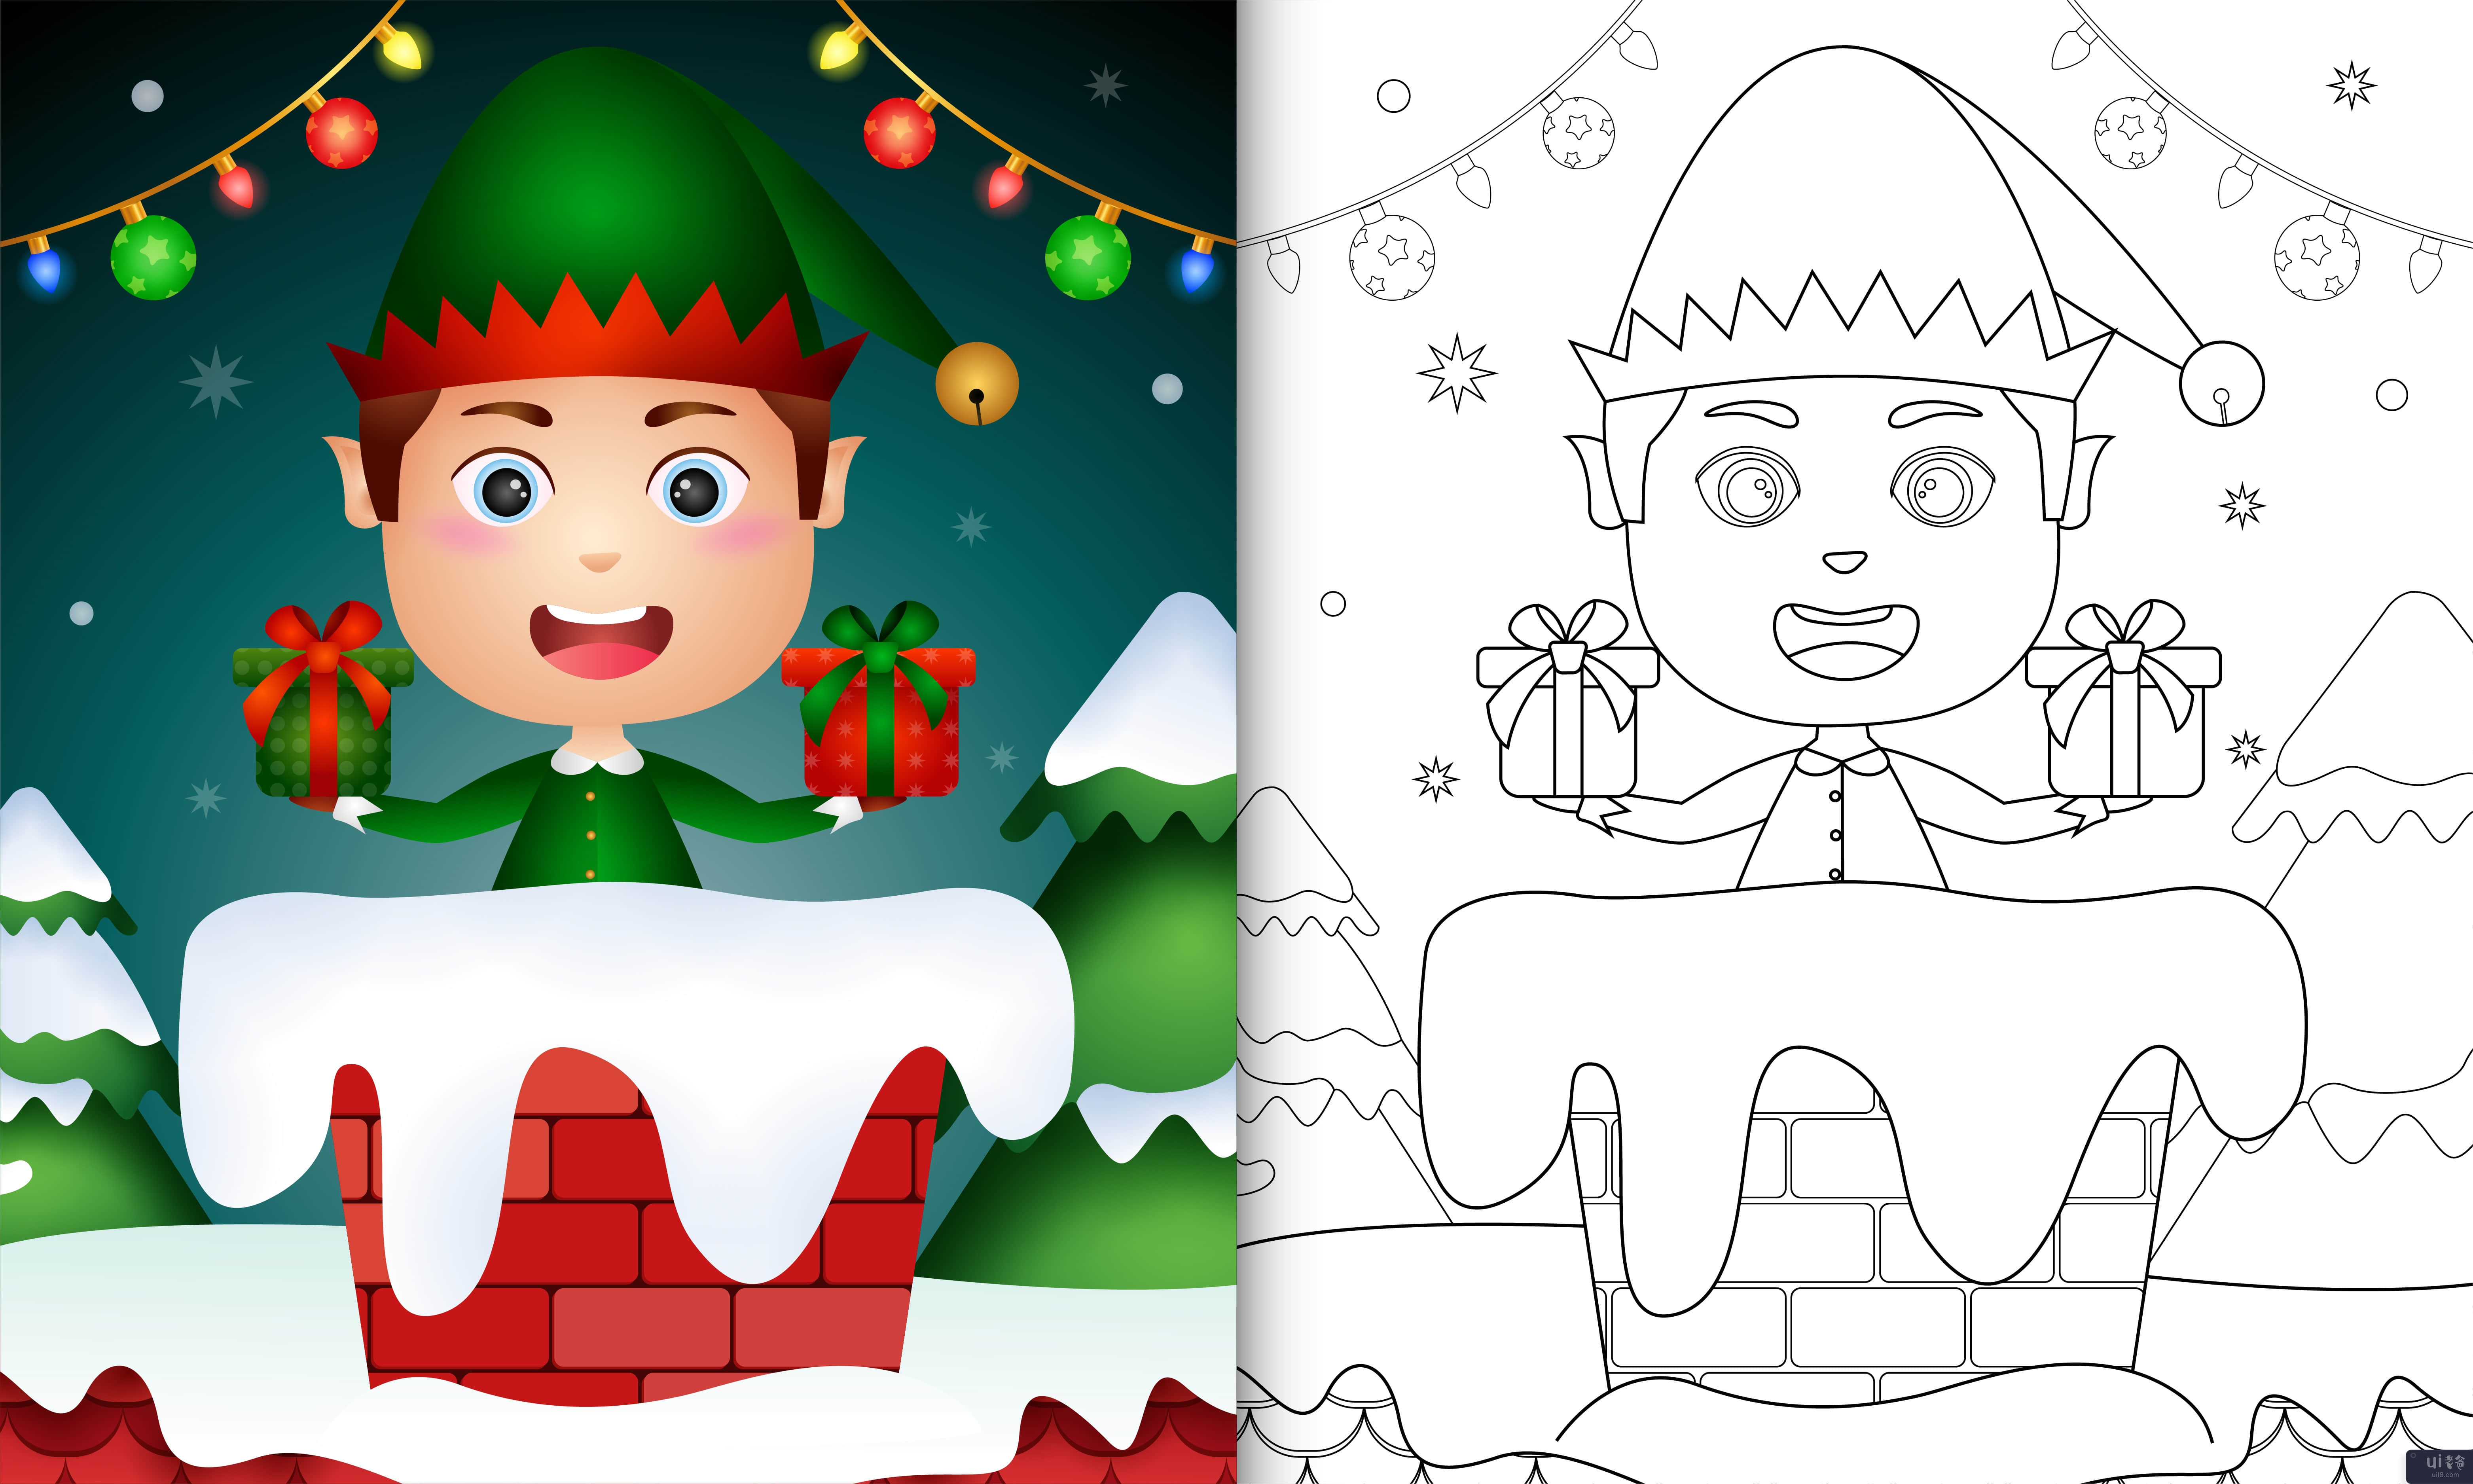 烟囱里有精灵男孩的孩子的可爱着色(cute coloring for kids with elf boy in chimney)插图2